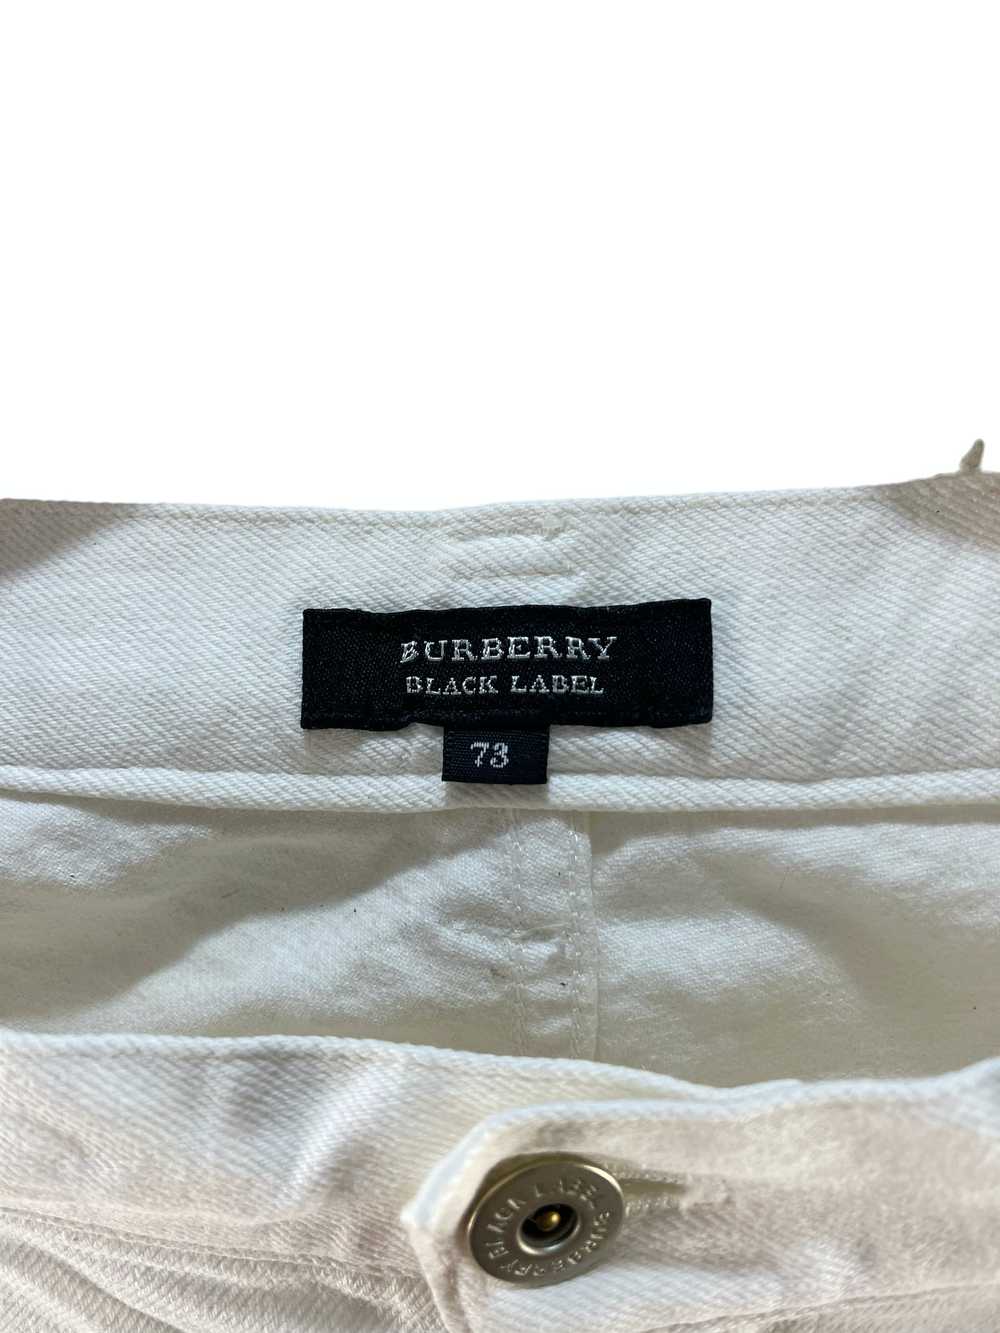 Burberry Burberry Black Label Cargo Pant - image 7